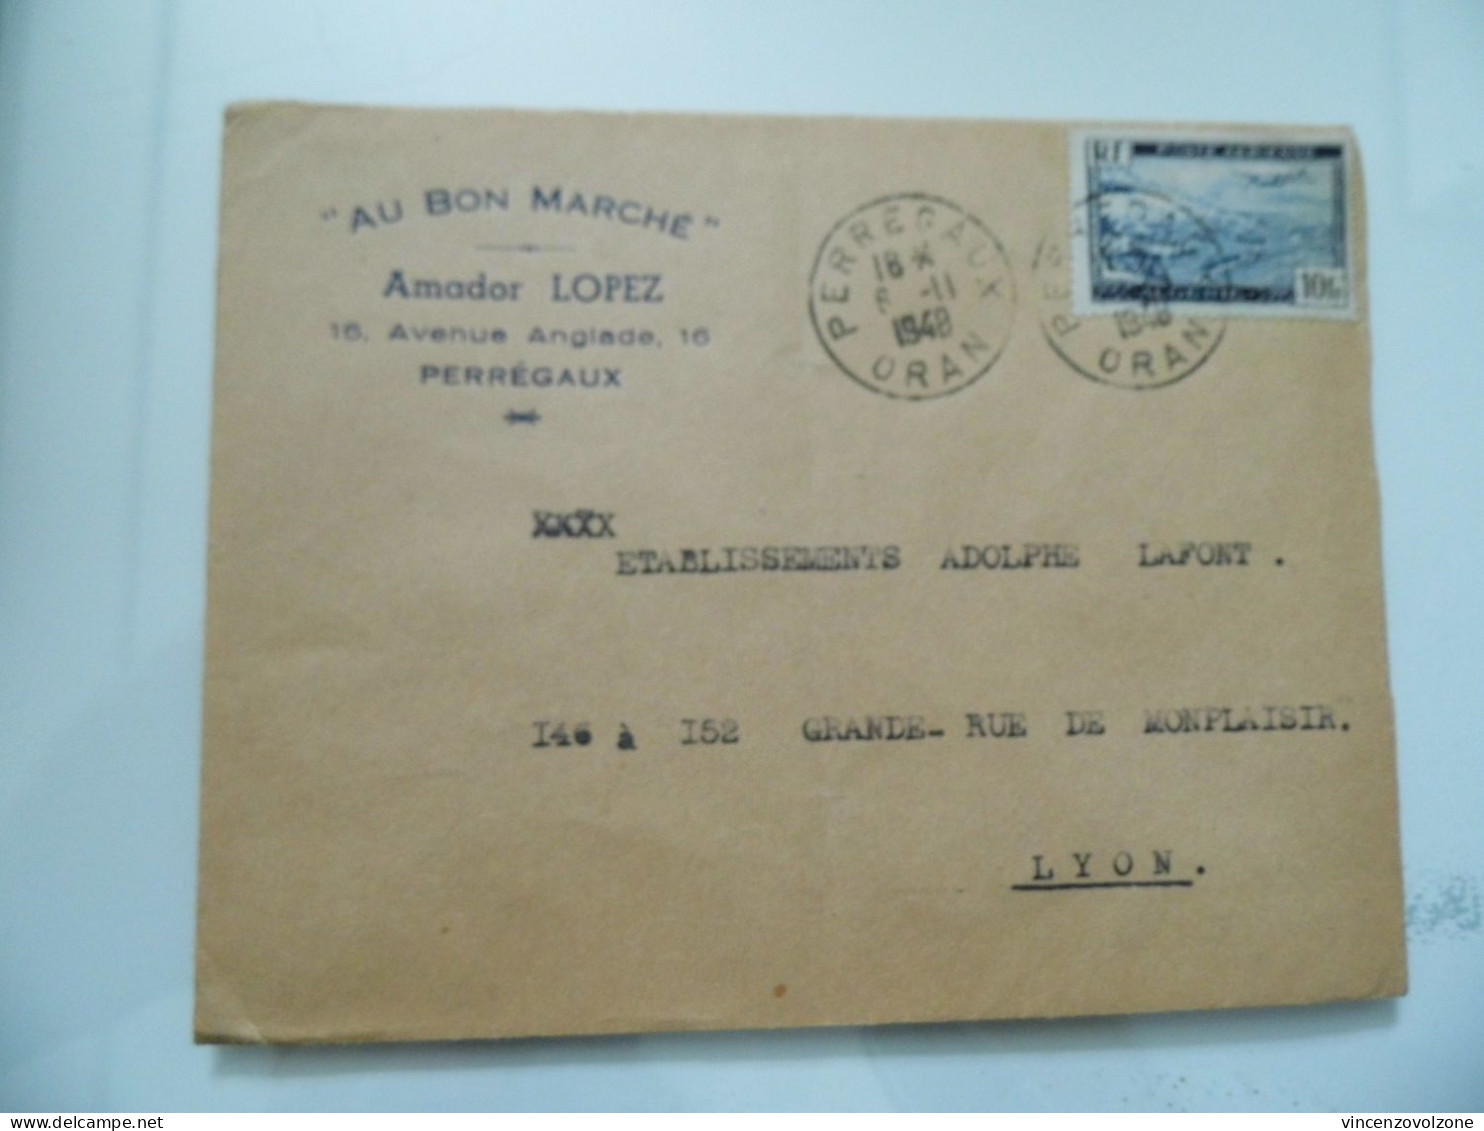 Busta Viaggiata Per La Francia Posta Aerea "AU BONNE MARCHE' Amador LOPEZ PERREGAUX" 1948 - Aéreo